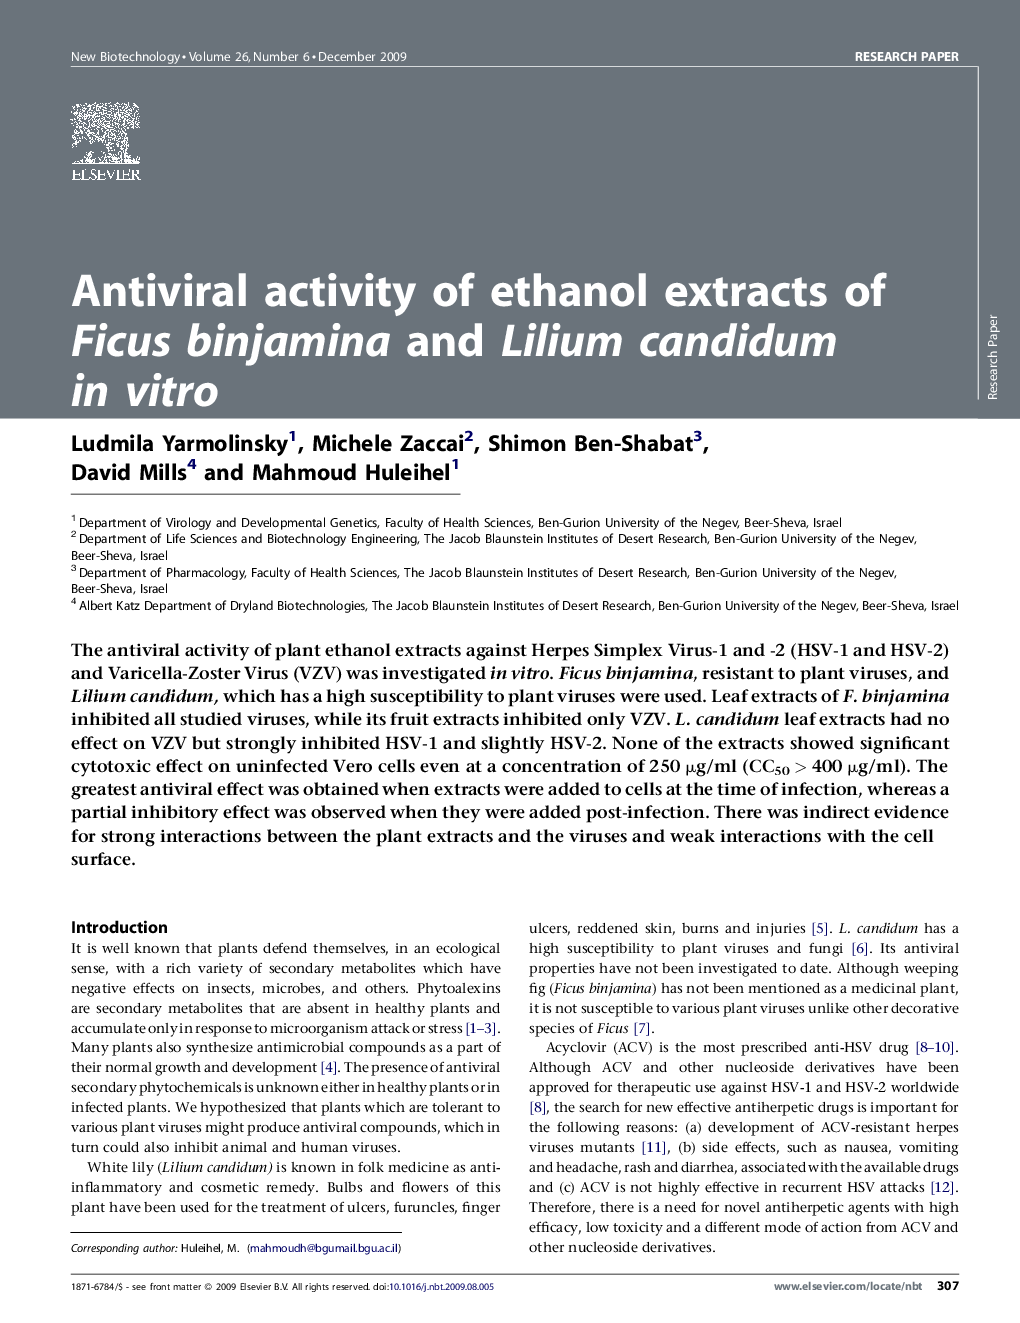 Antiviral activity of ethanol extracts of Ficus binjamina and Lilium candidum in vitro